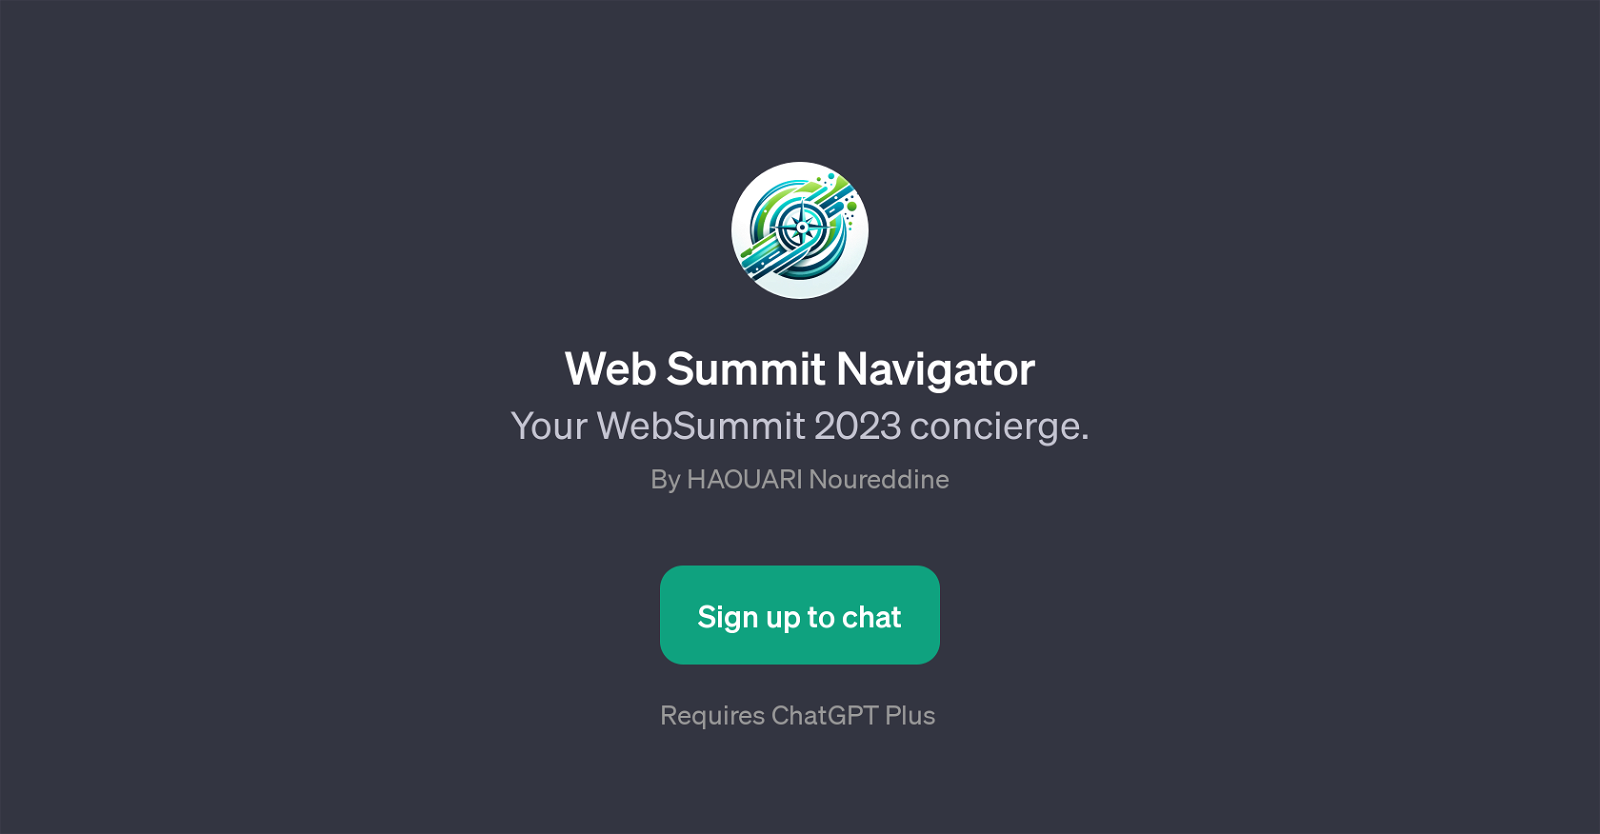 Web Summit Navigator website